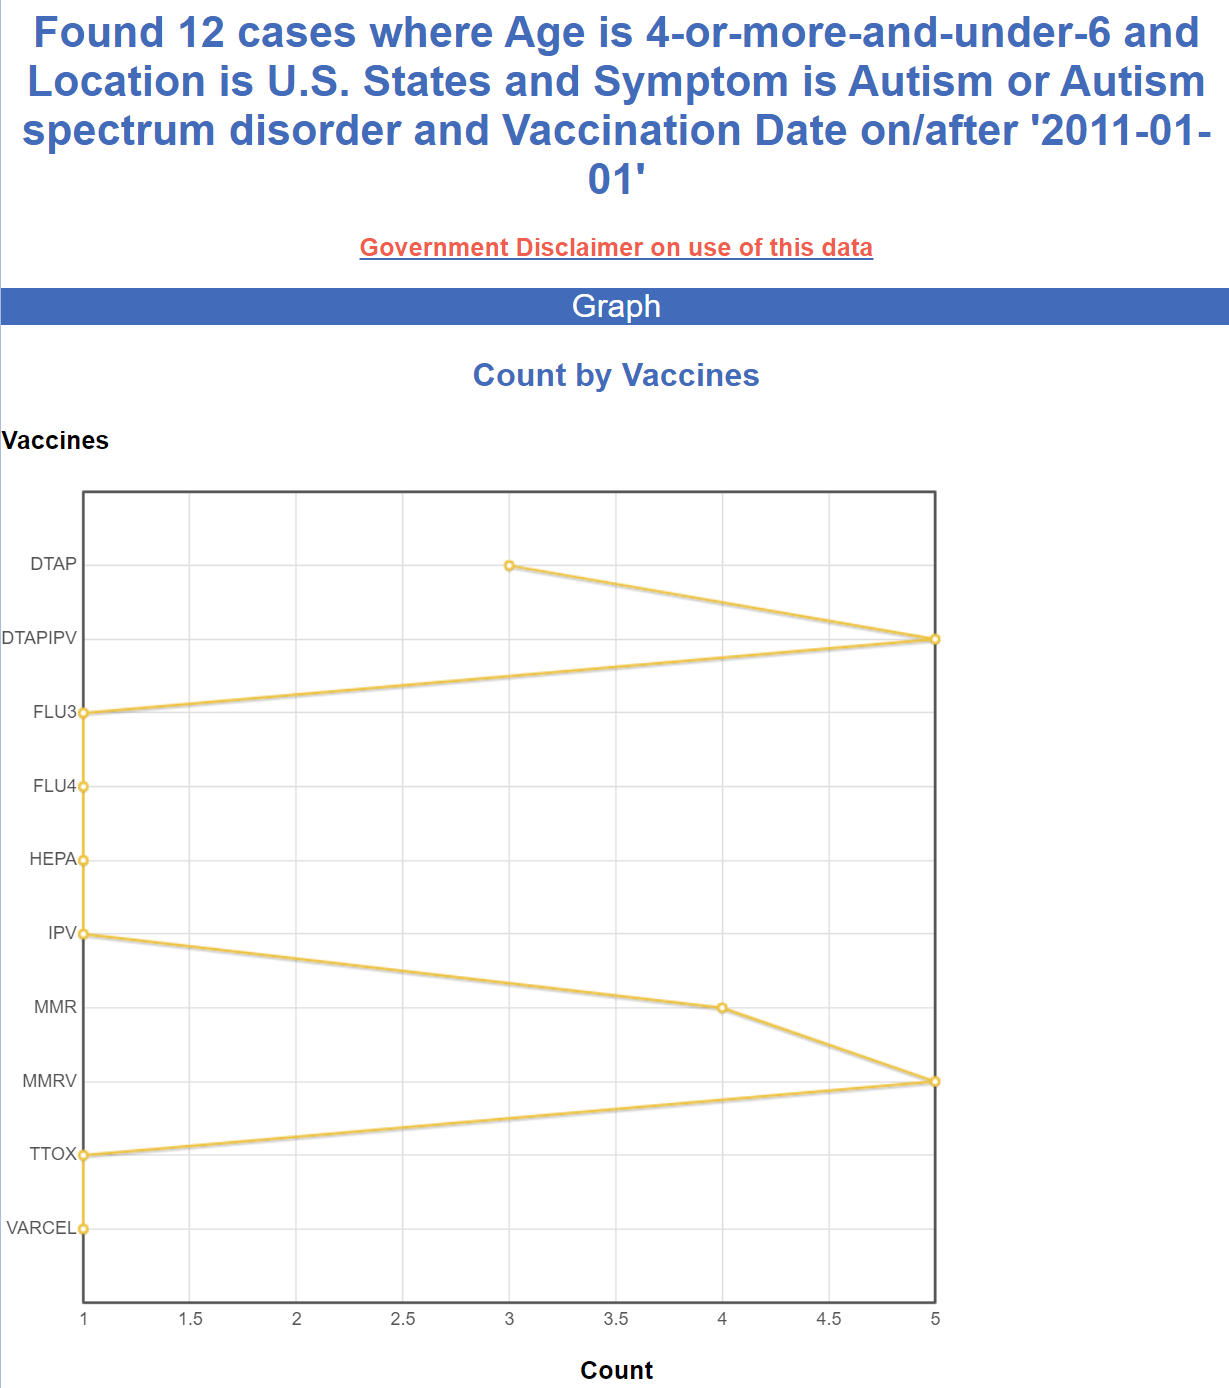 VAERS data shows that vaccines cause autism Https%3A%2F%2Fsubstack-post-media.s3.amazonaws.com%2Fpublic%2Fimages%2Fddcae810-07c8-474c-9c93-5d2abafcfc69_1229x1388